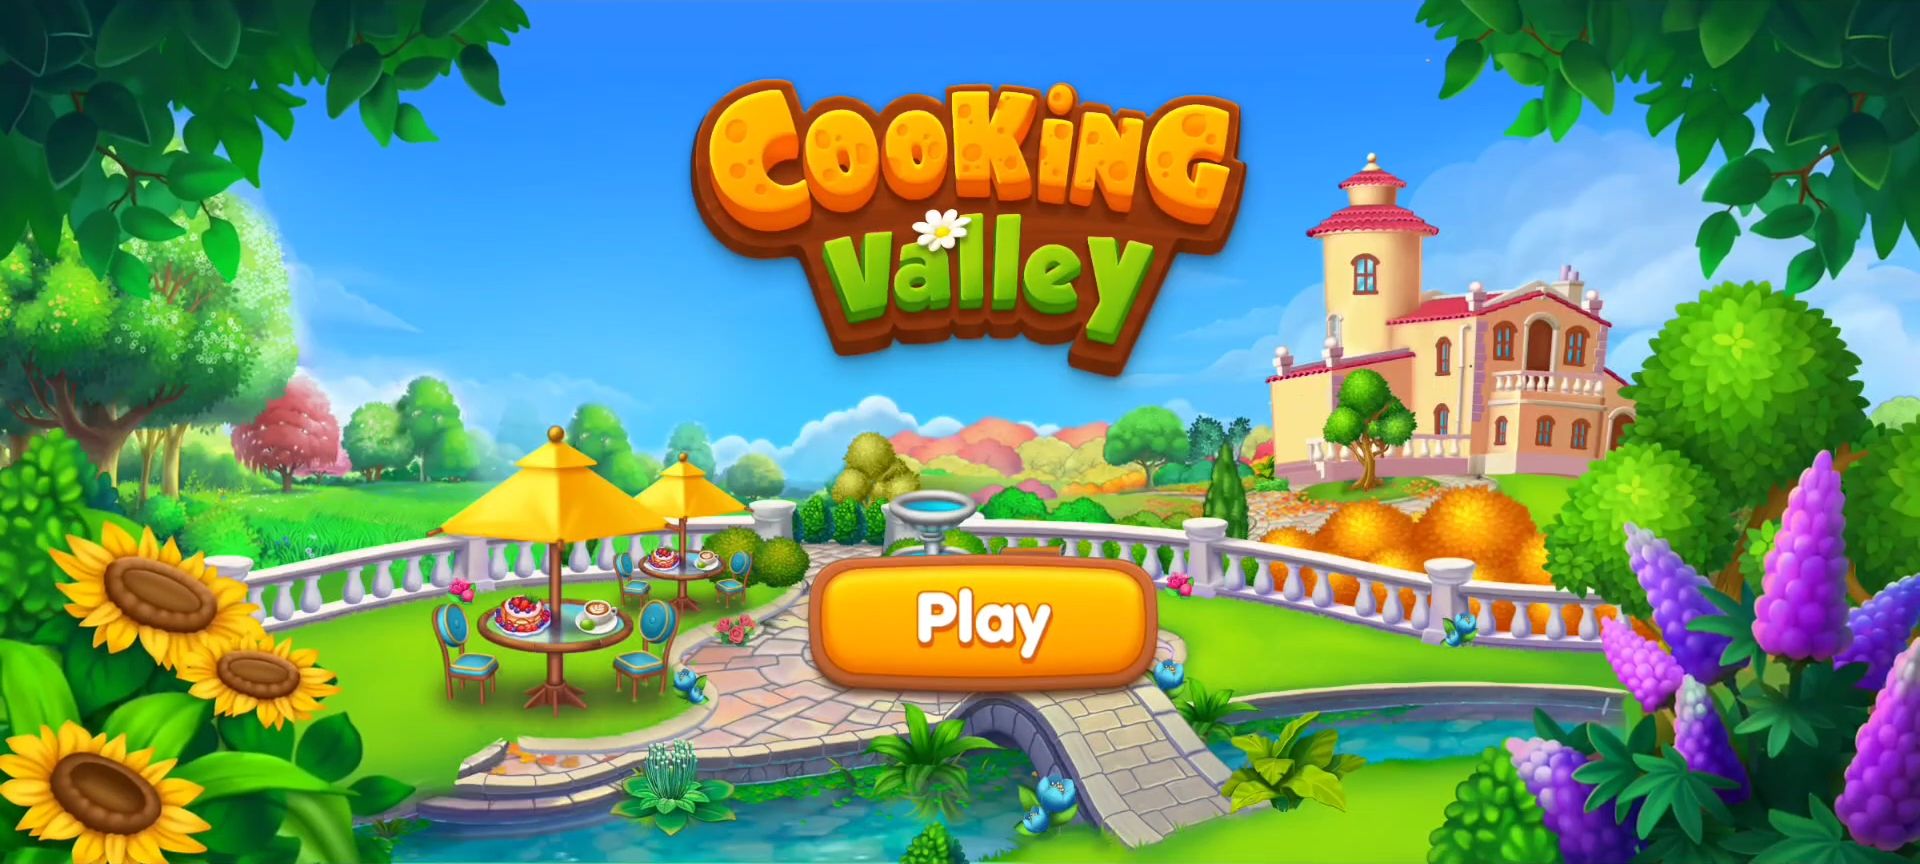 Descargar Valley: Cooking Games & Design gratis para Android.